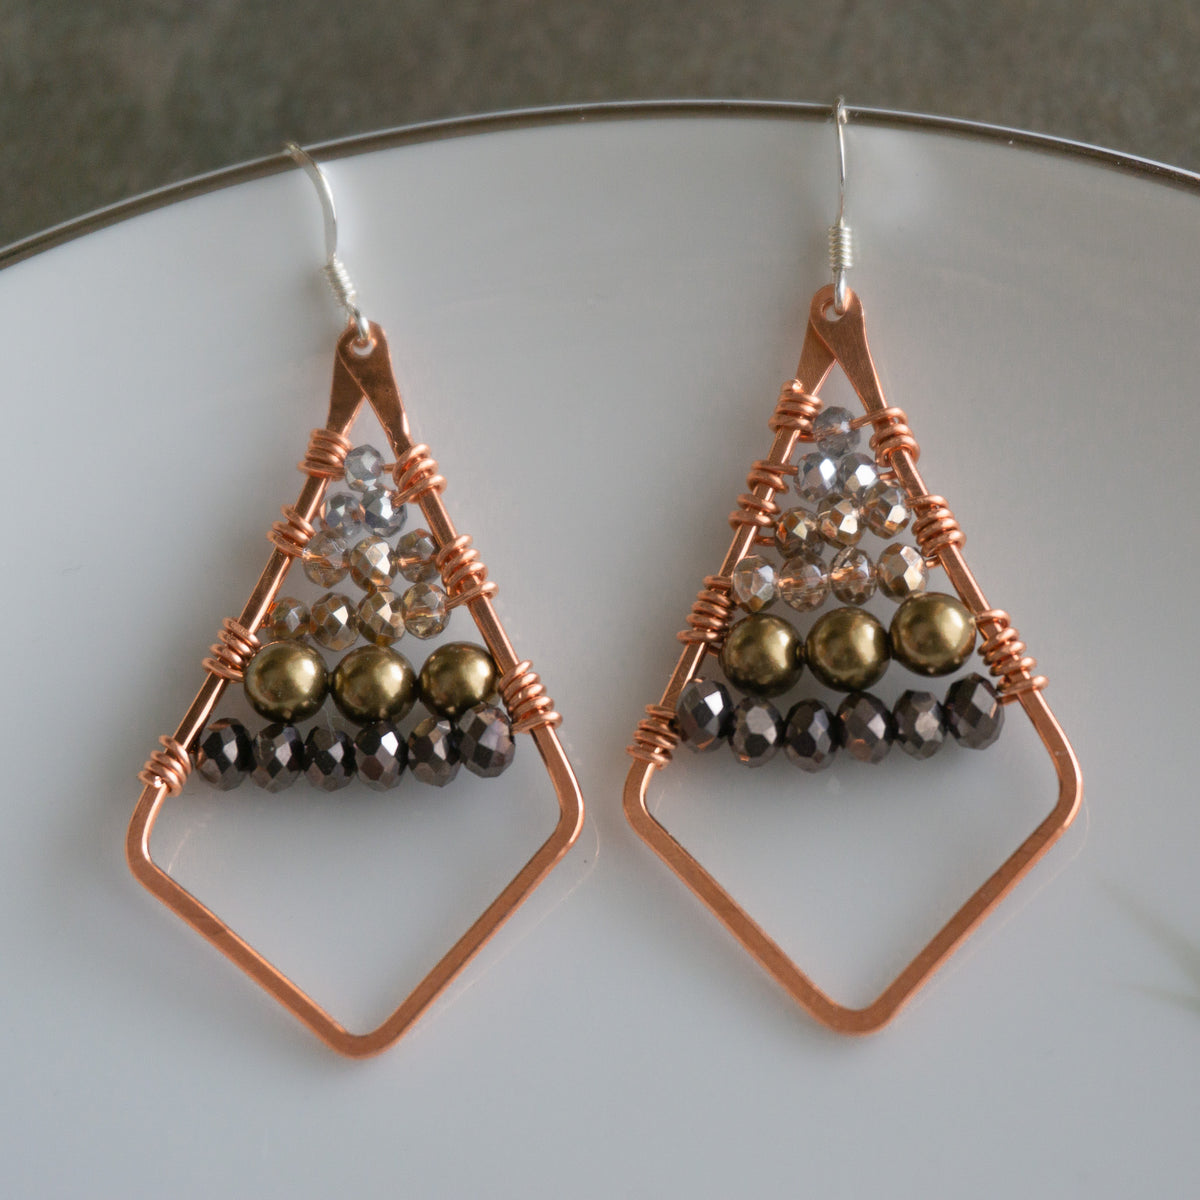 Ombre Earrings - Copper Mixed Metal